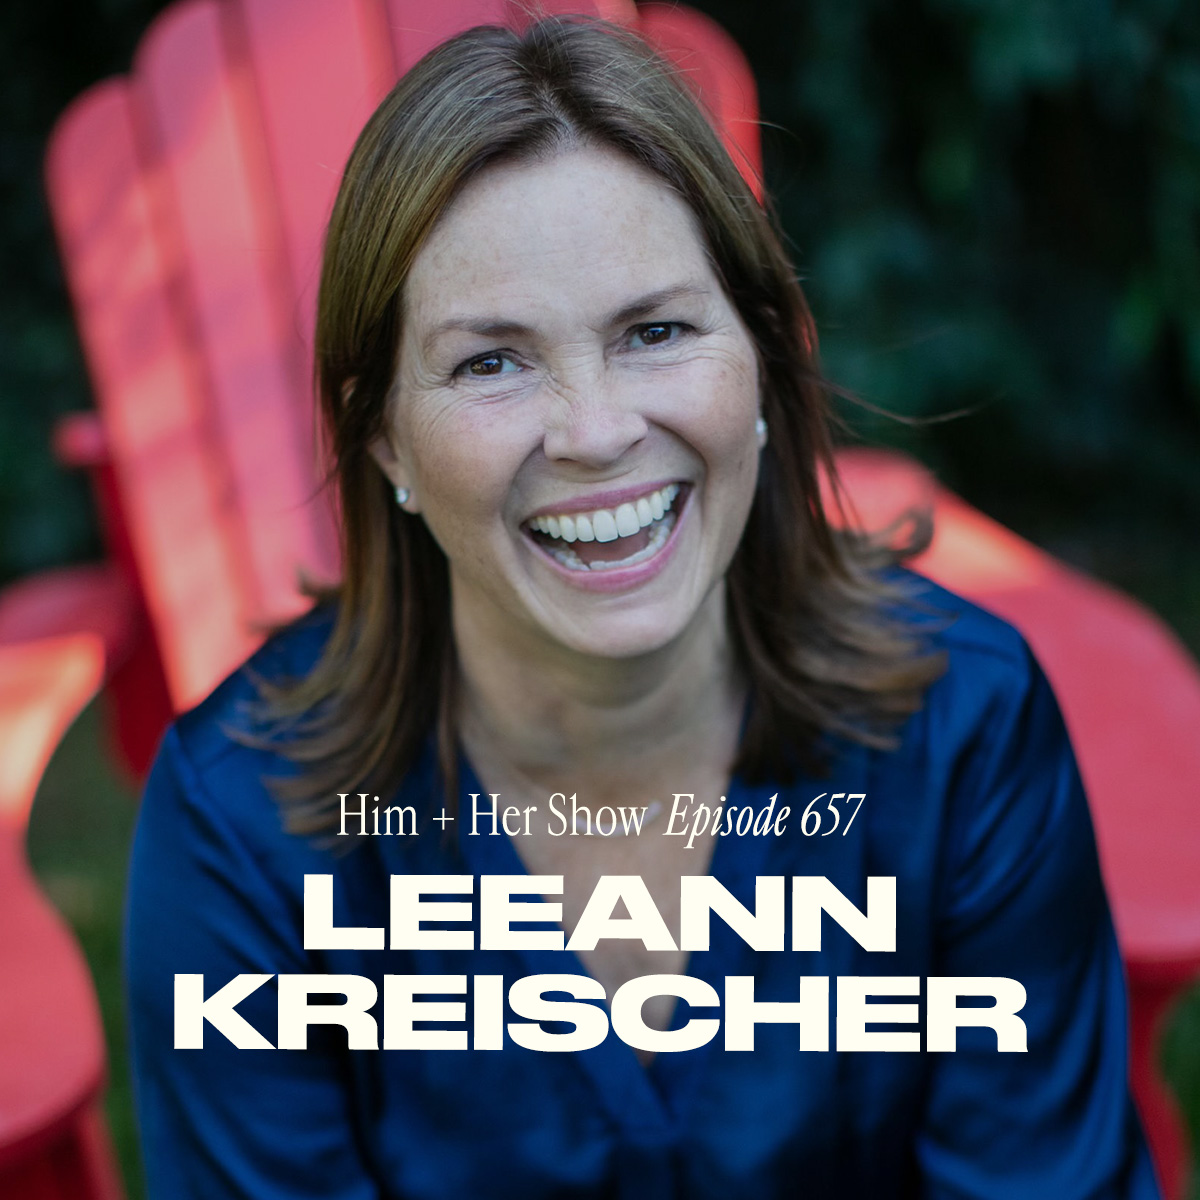 LeAnn Kresicher